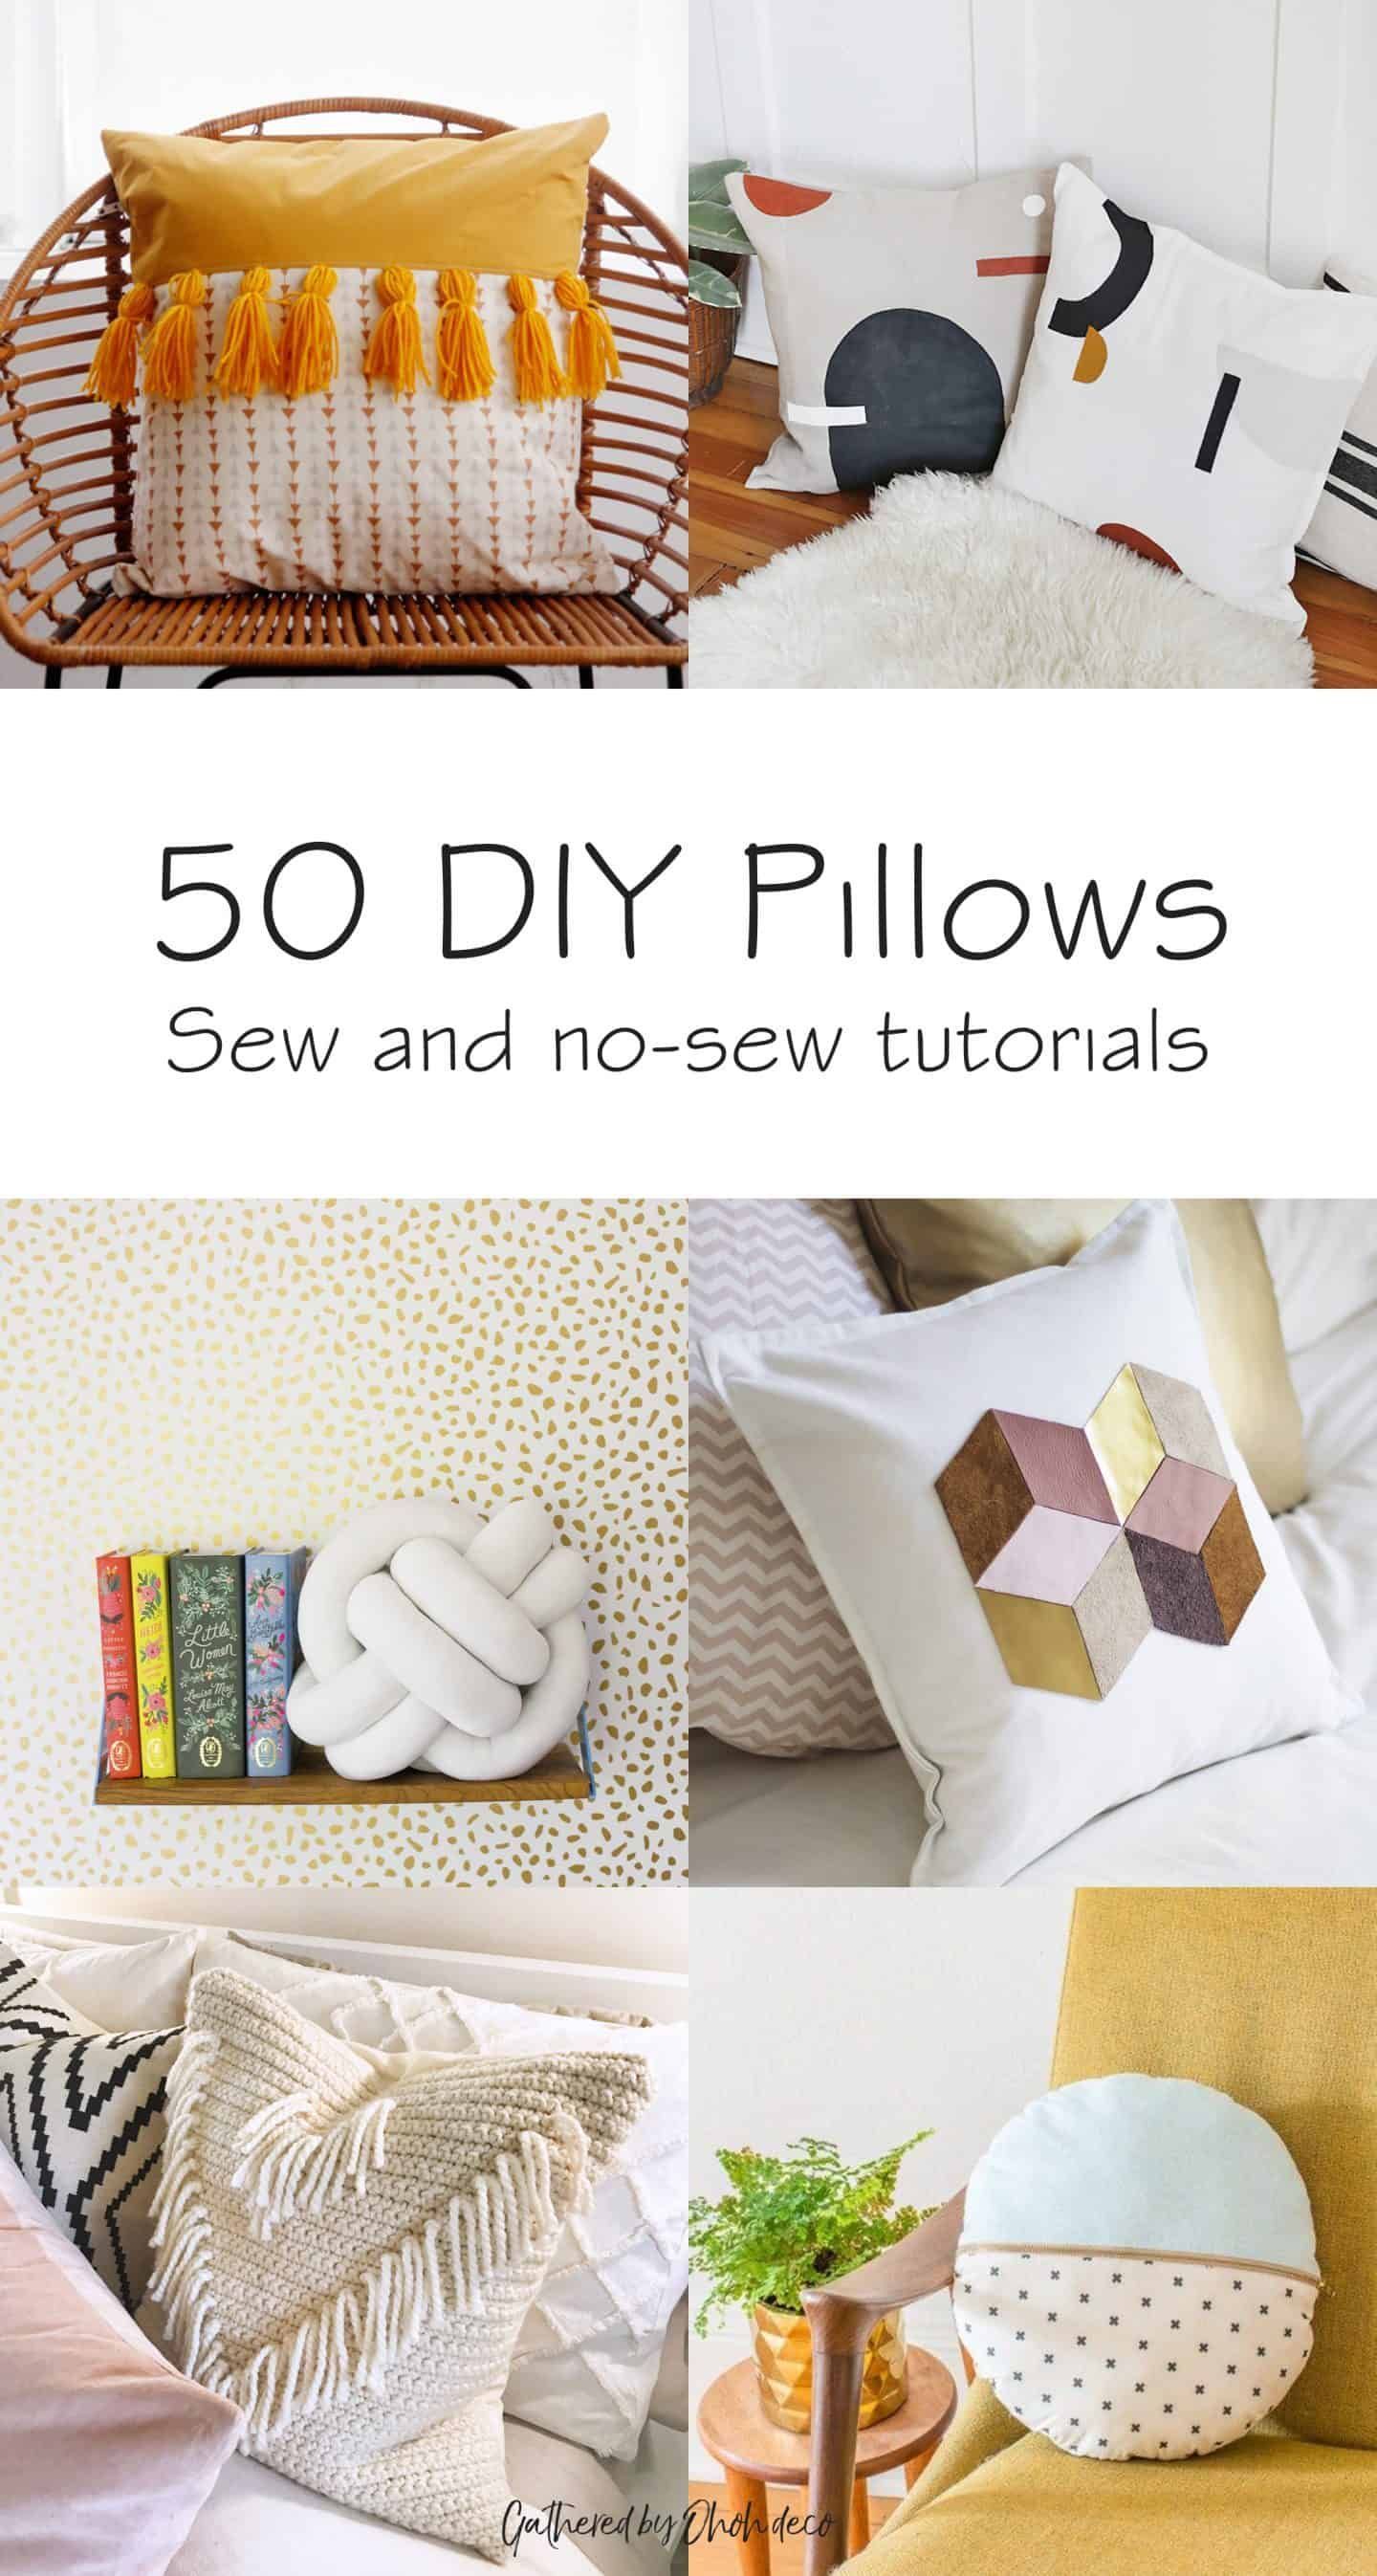 19 diy Pillows big ideas